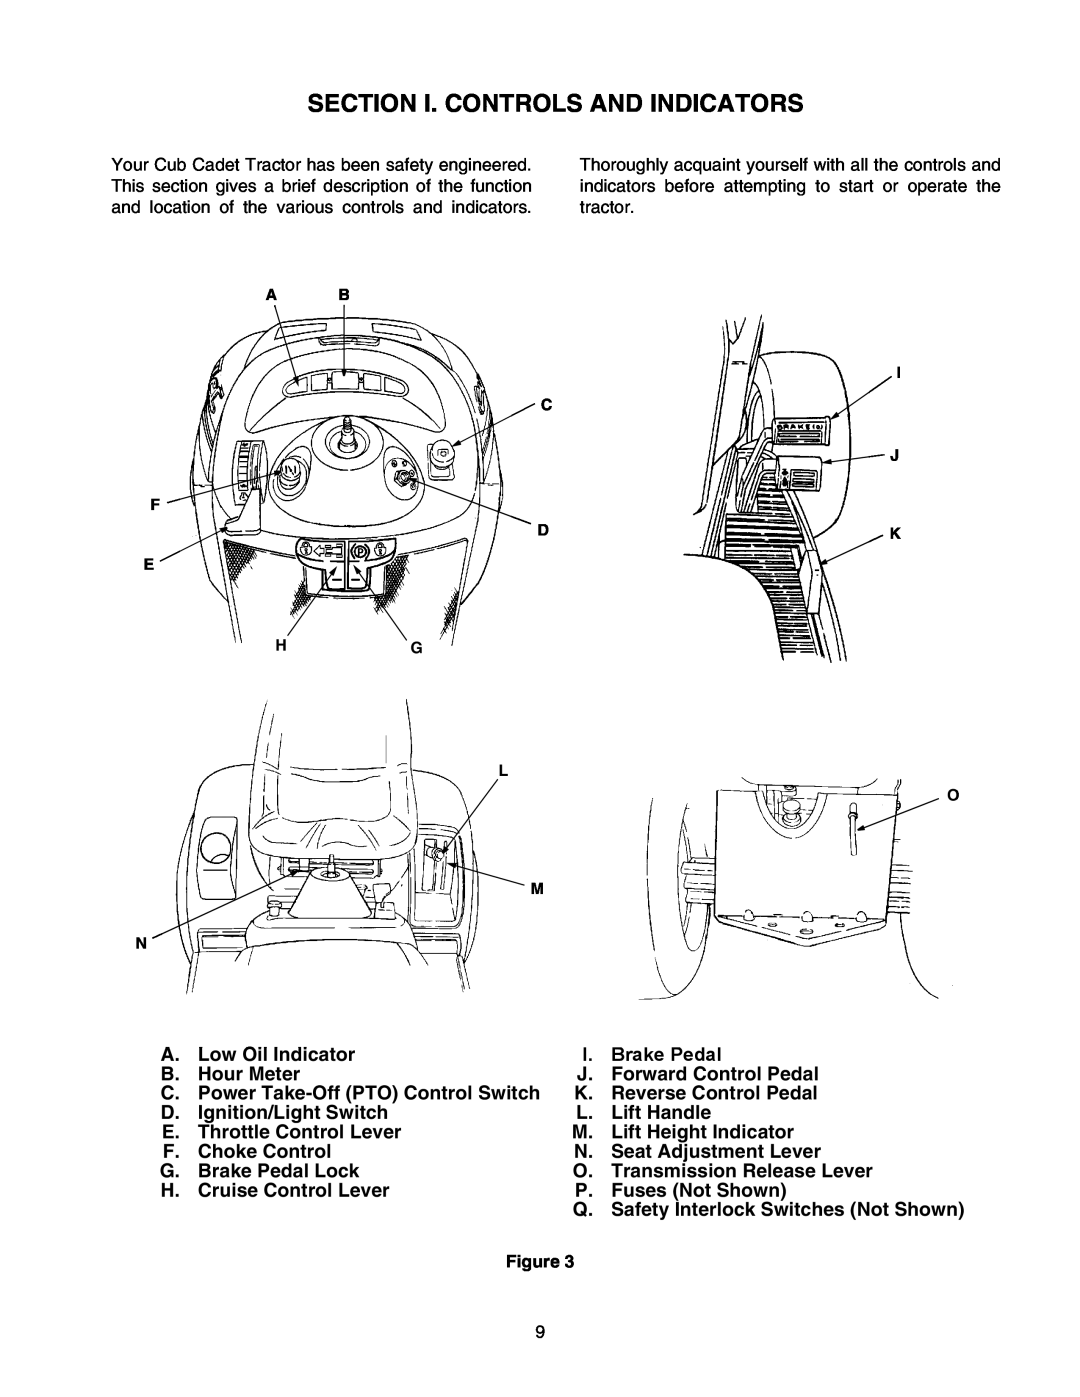 Cub Cadet 2176 manual Section I. Controls And Indicators, Brake Pedal 